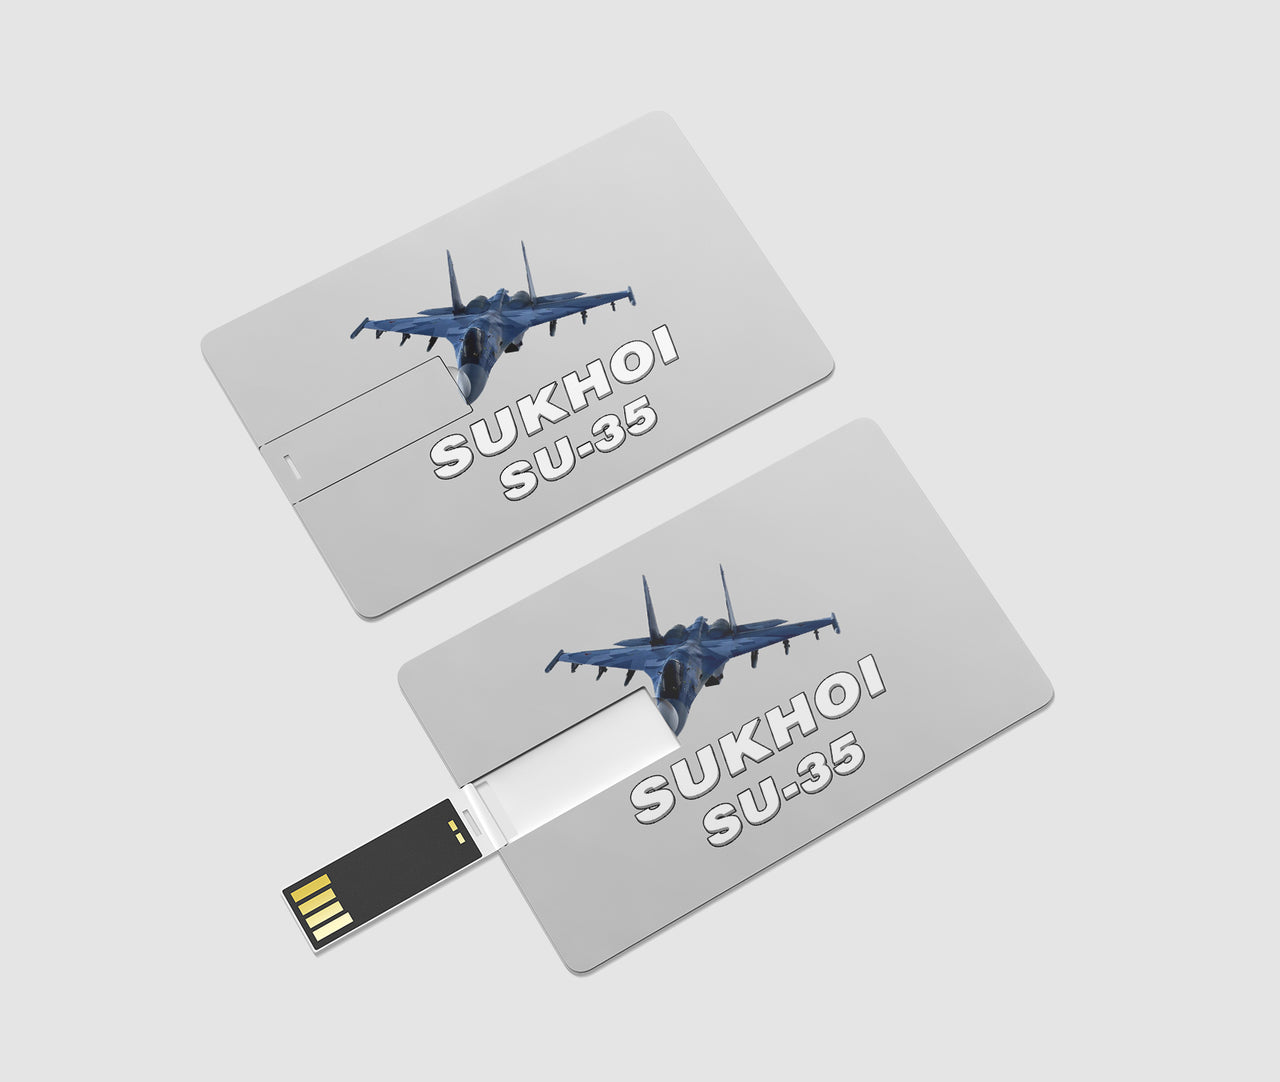 The Sukhoi SU-35 Designed USB Cards